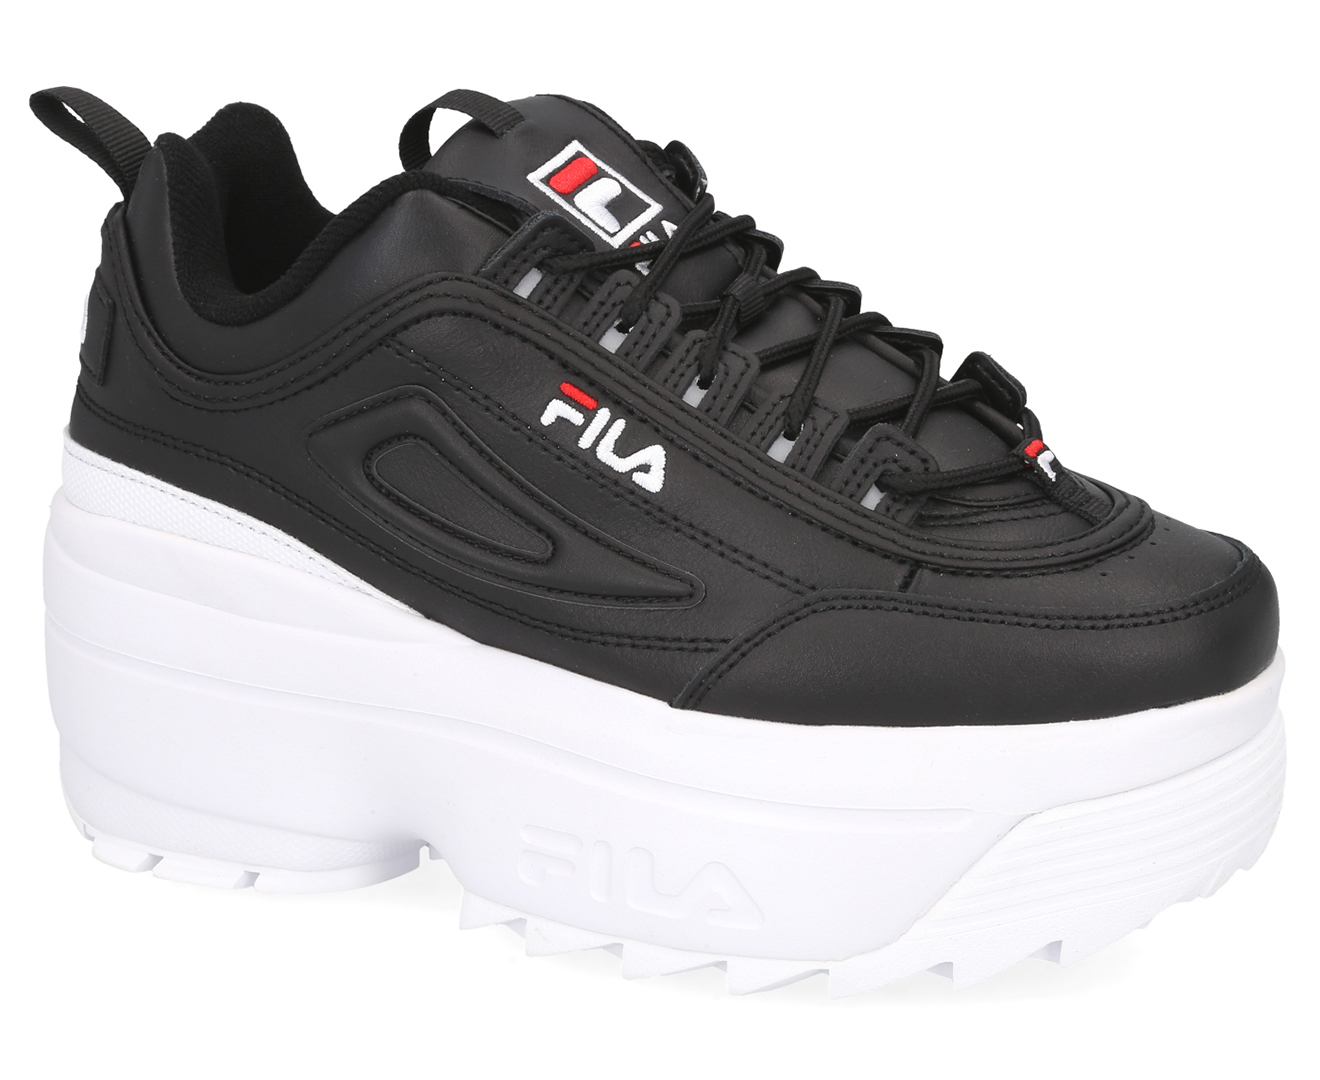 Fila Women's Disruptor 2 Wedge Sneakers - Black/Red/White | Catch.com.au